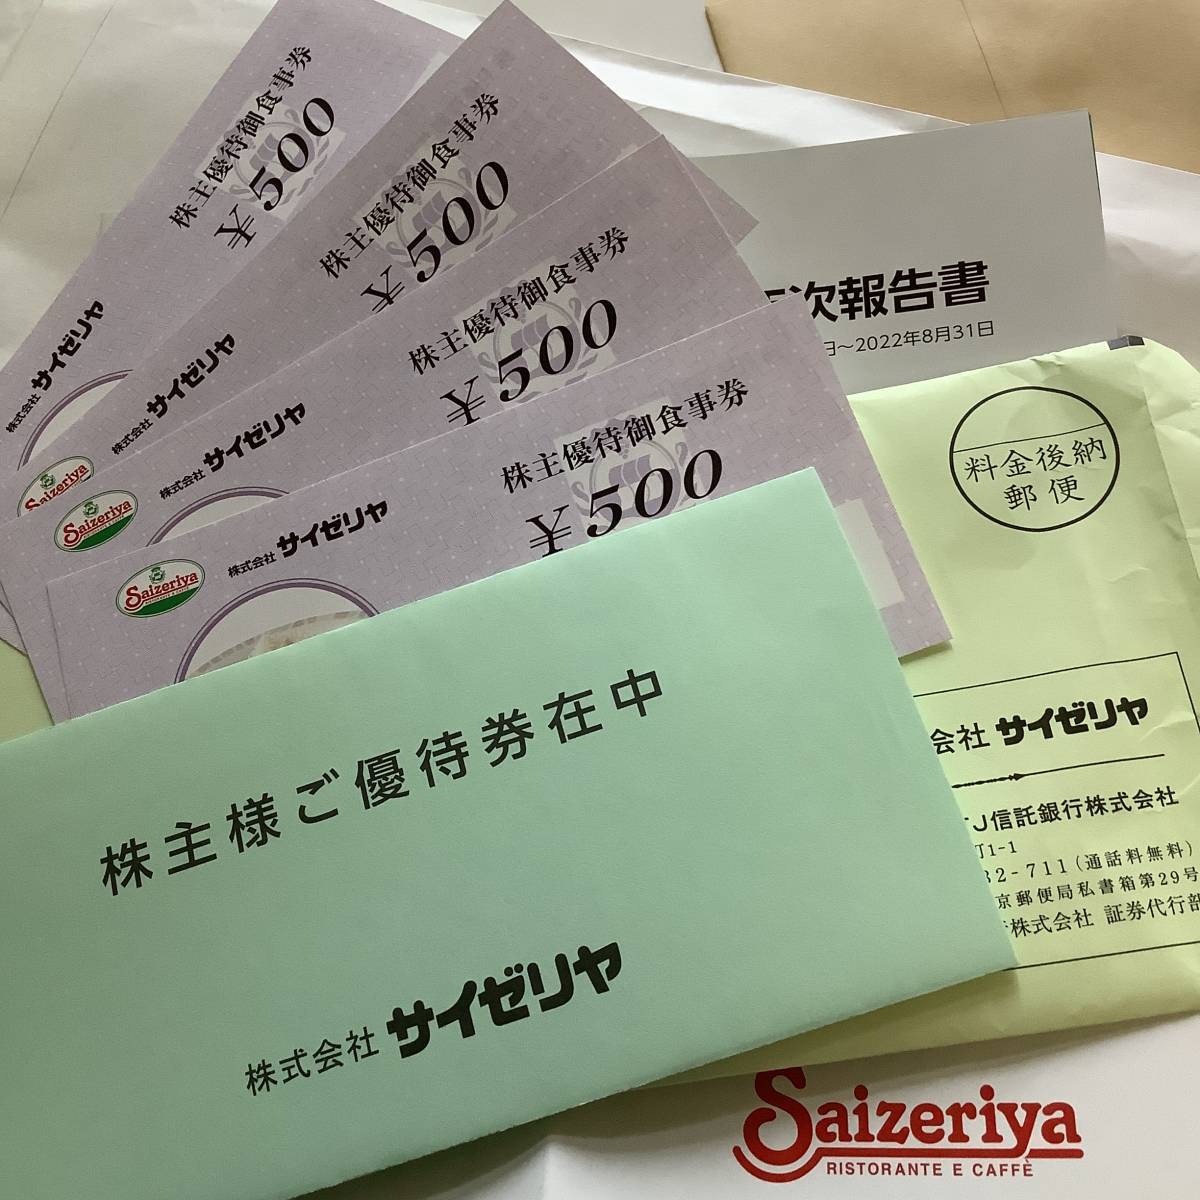 Yahoo!オークション -「サイゼリヤ 優待」(チケット、金券、宿泊予約